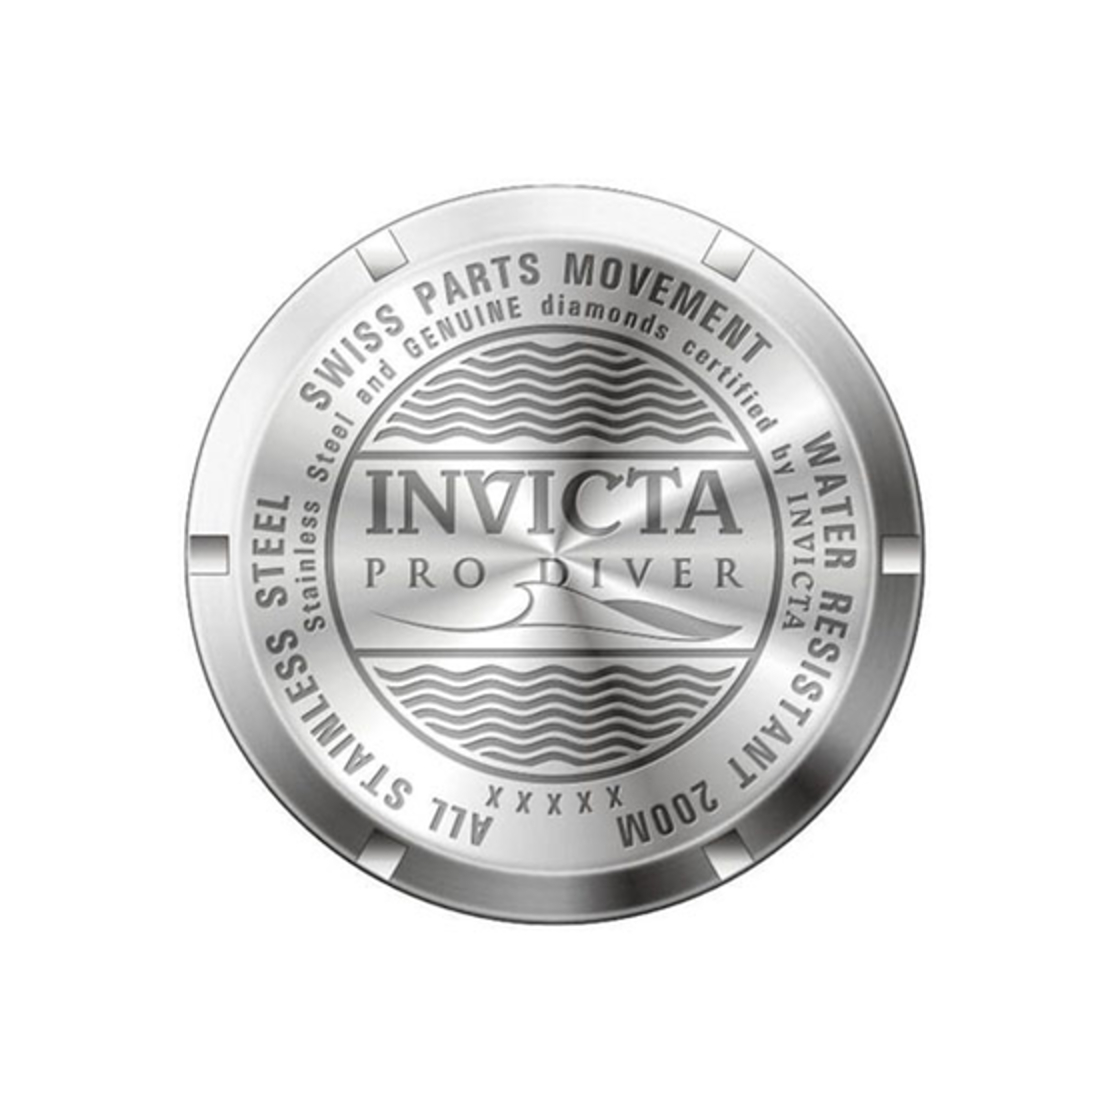 שעון Invicta Pro Diver לגבר דגם 15286